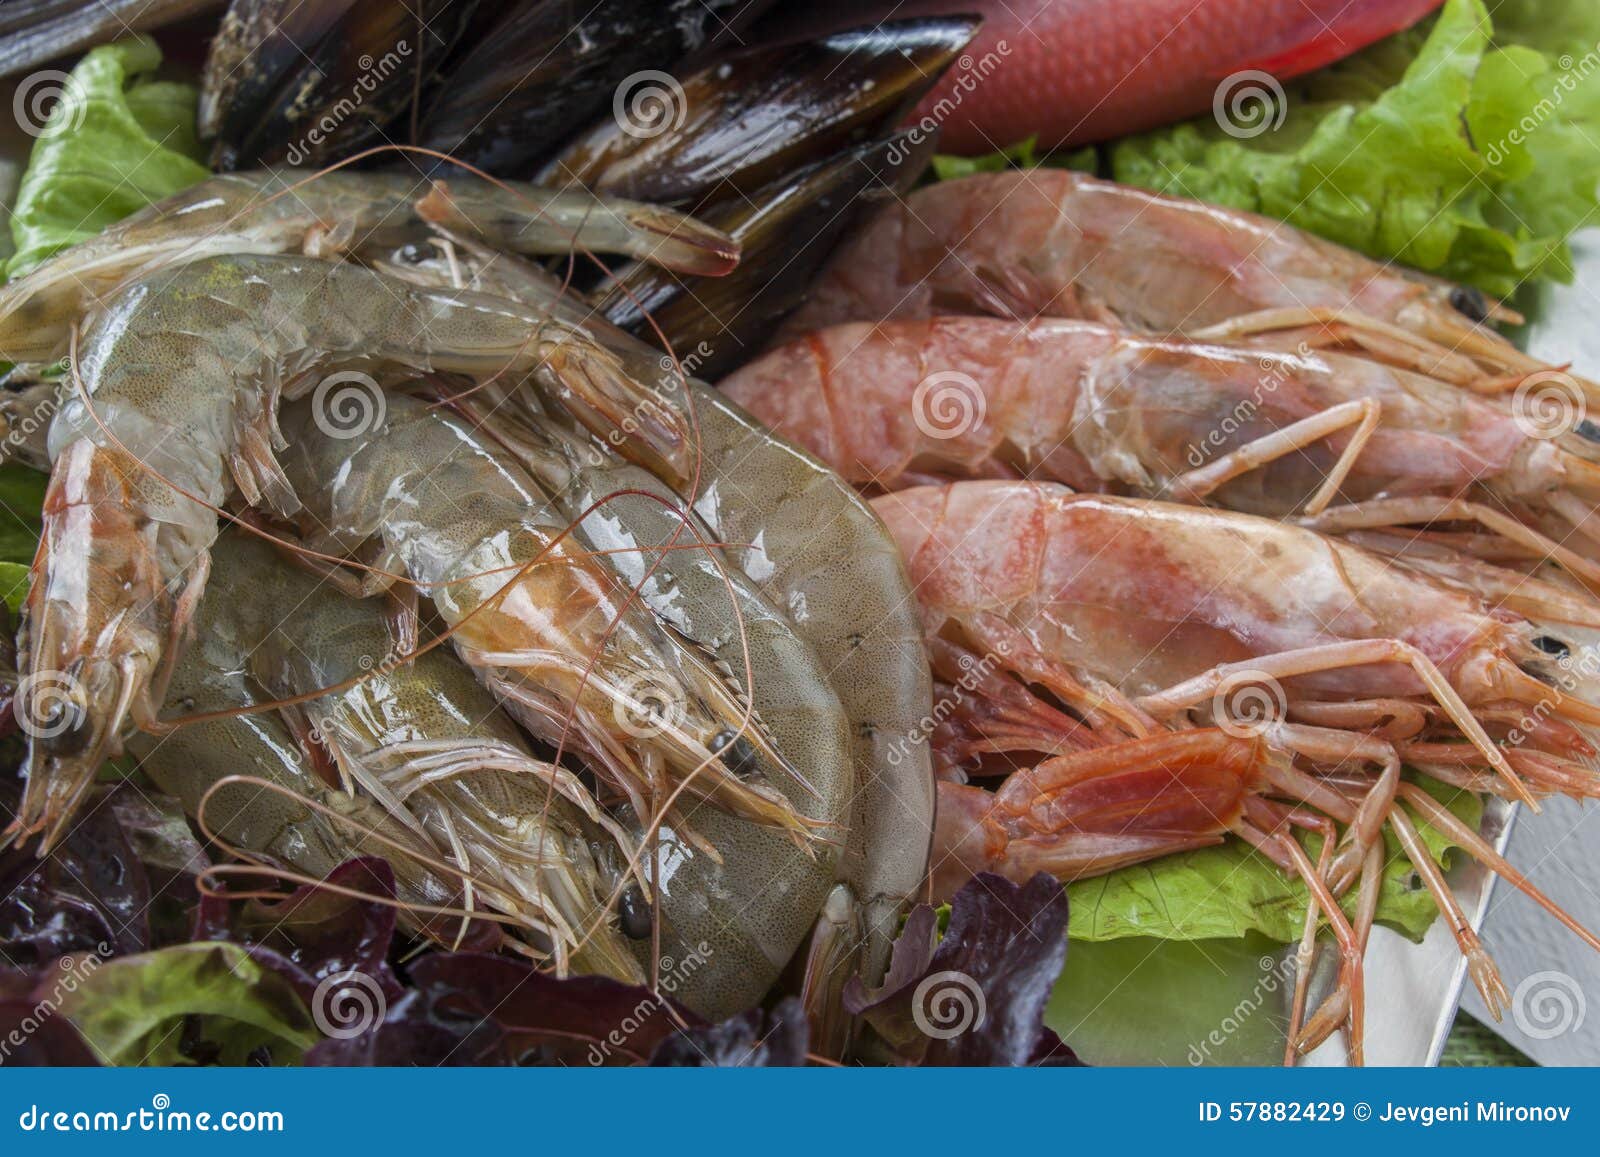 fresh shrimps and fish